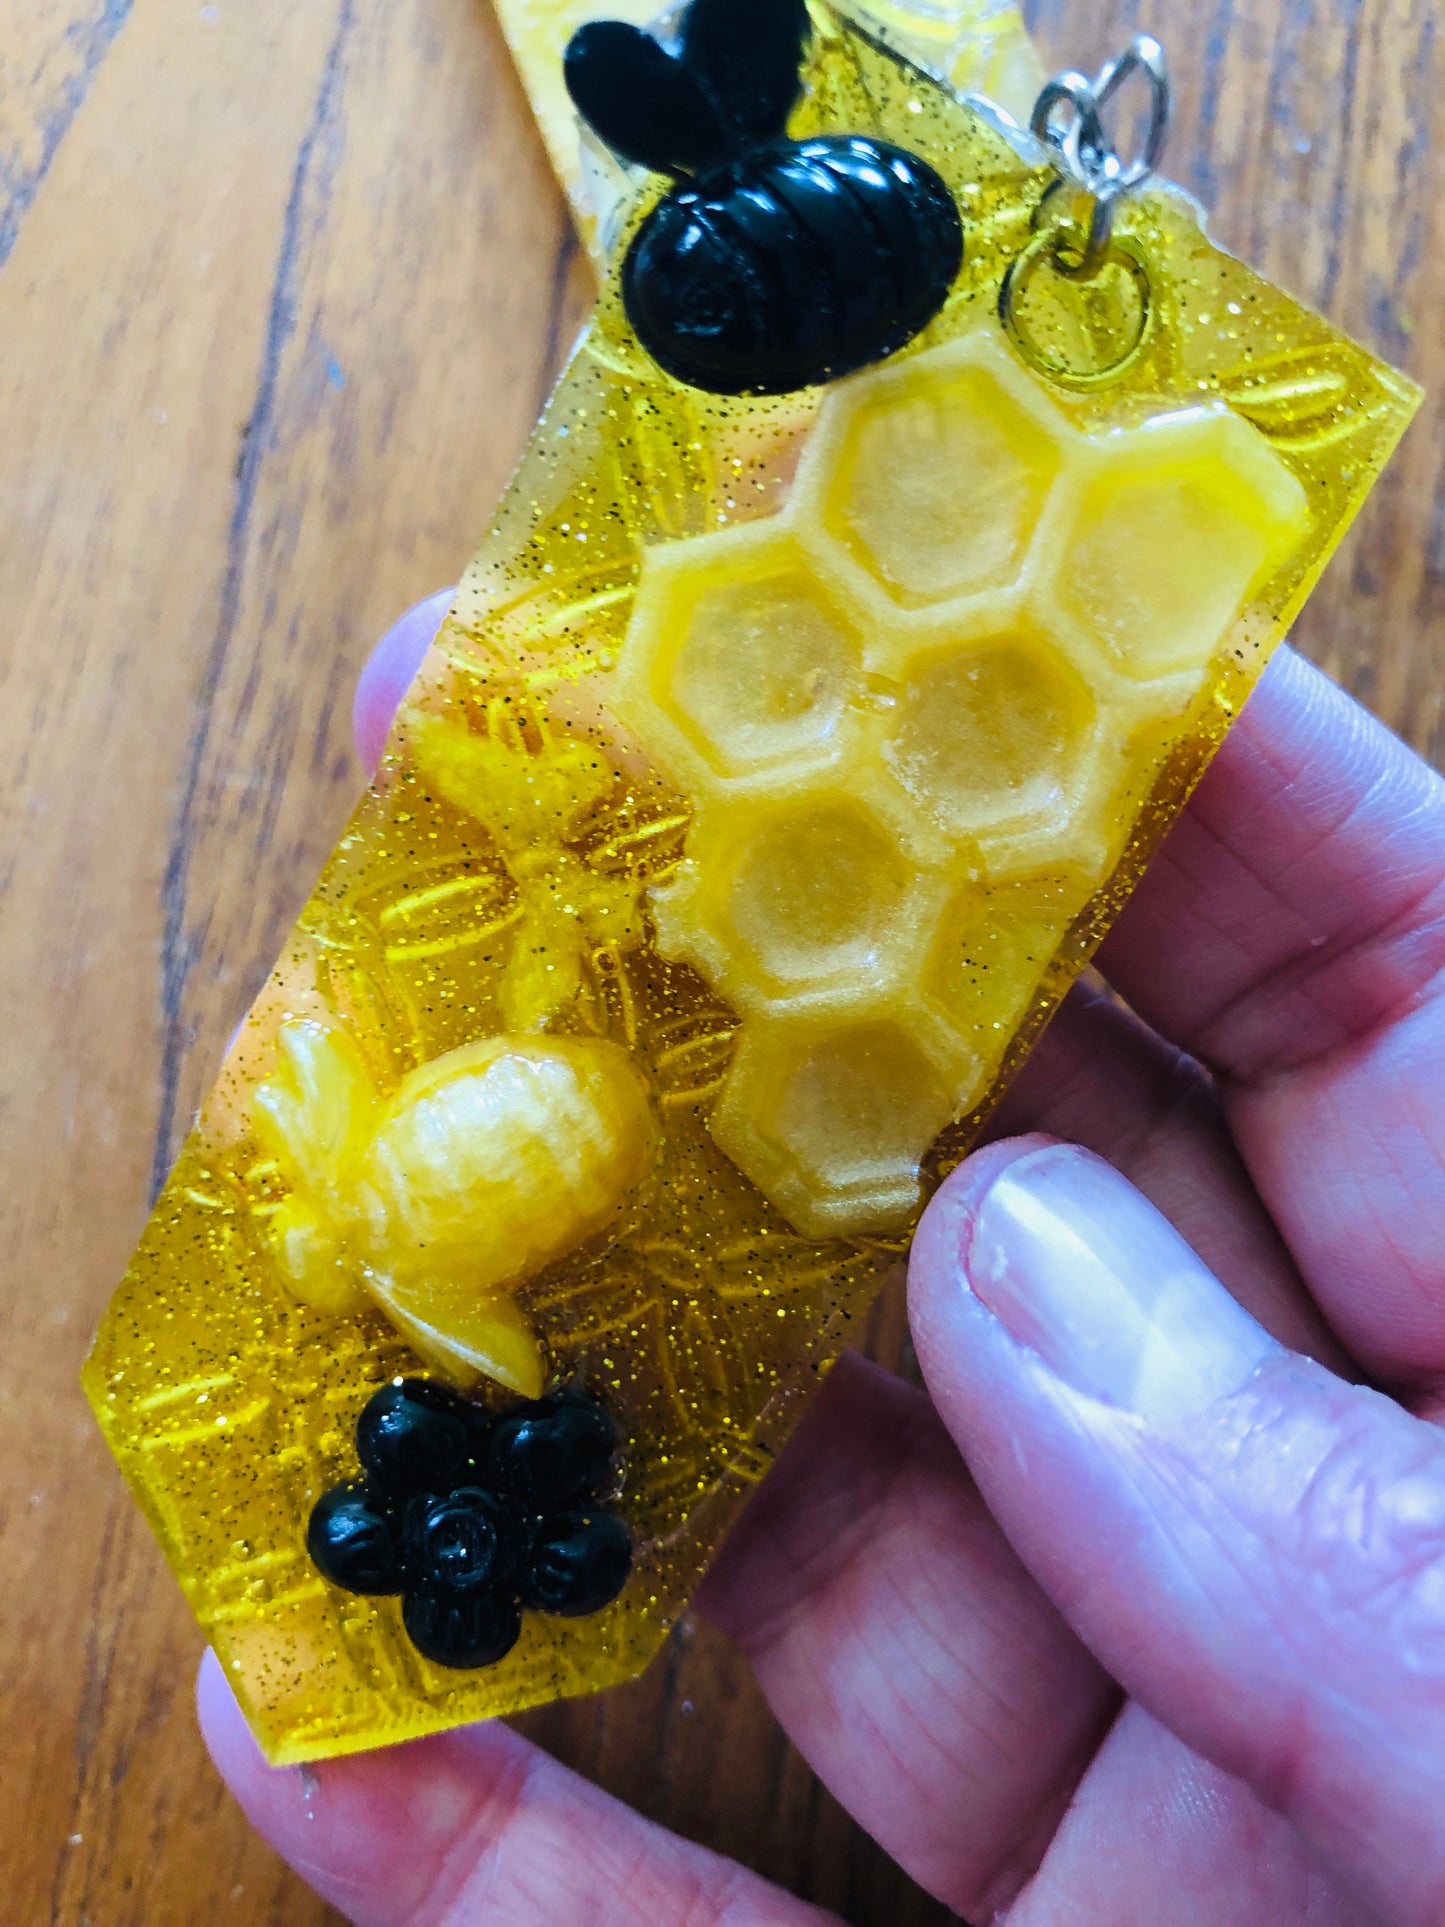 Bumble Bee Bag Tags - Resin KeyRings - Made to Order 💛🖤💛